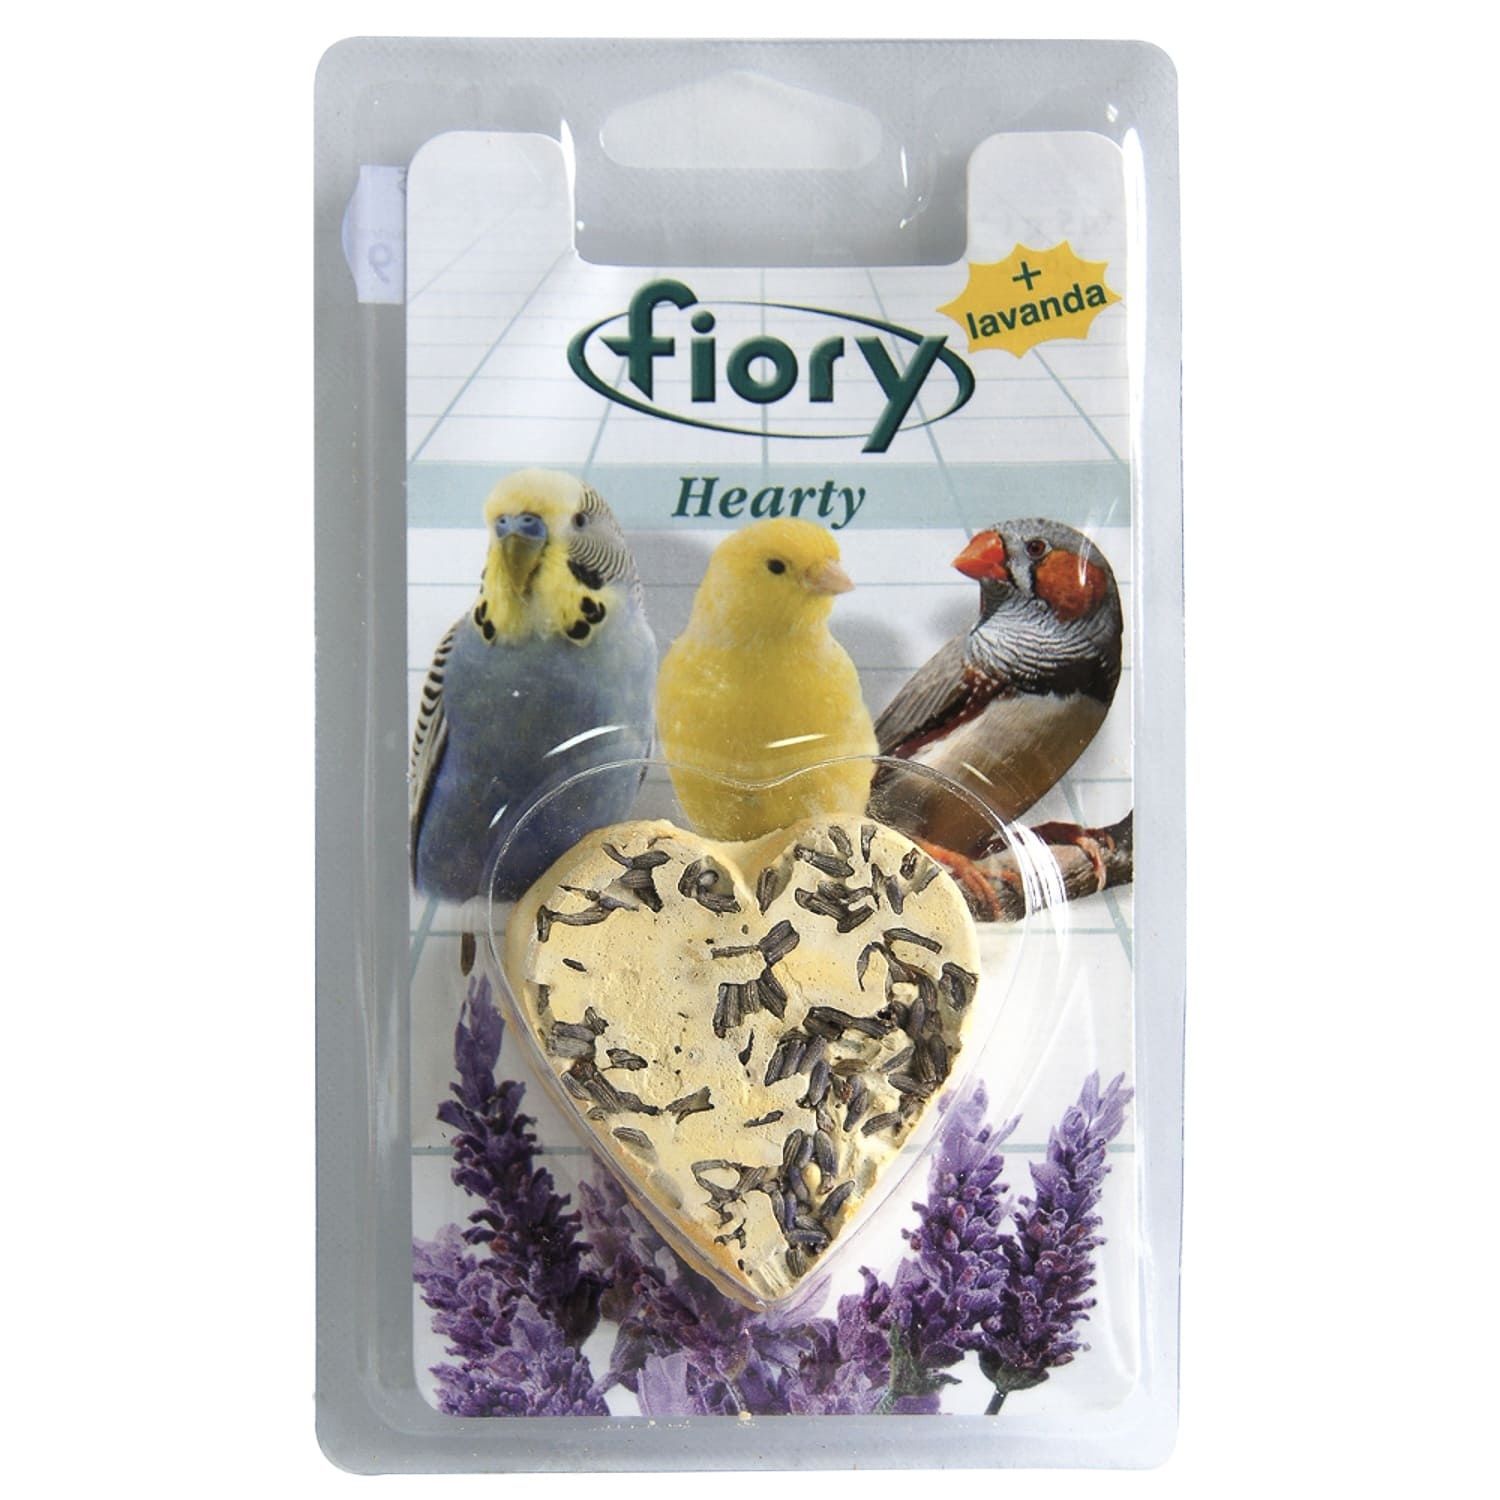 Fiory Fiory био-камень для птиц, с лавандой в форме сердца (45 г) fiory fiory био камень для птиц с лавандой в форме сердца 45 г